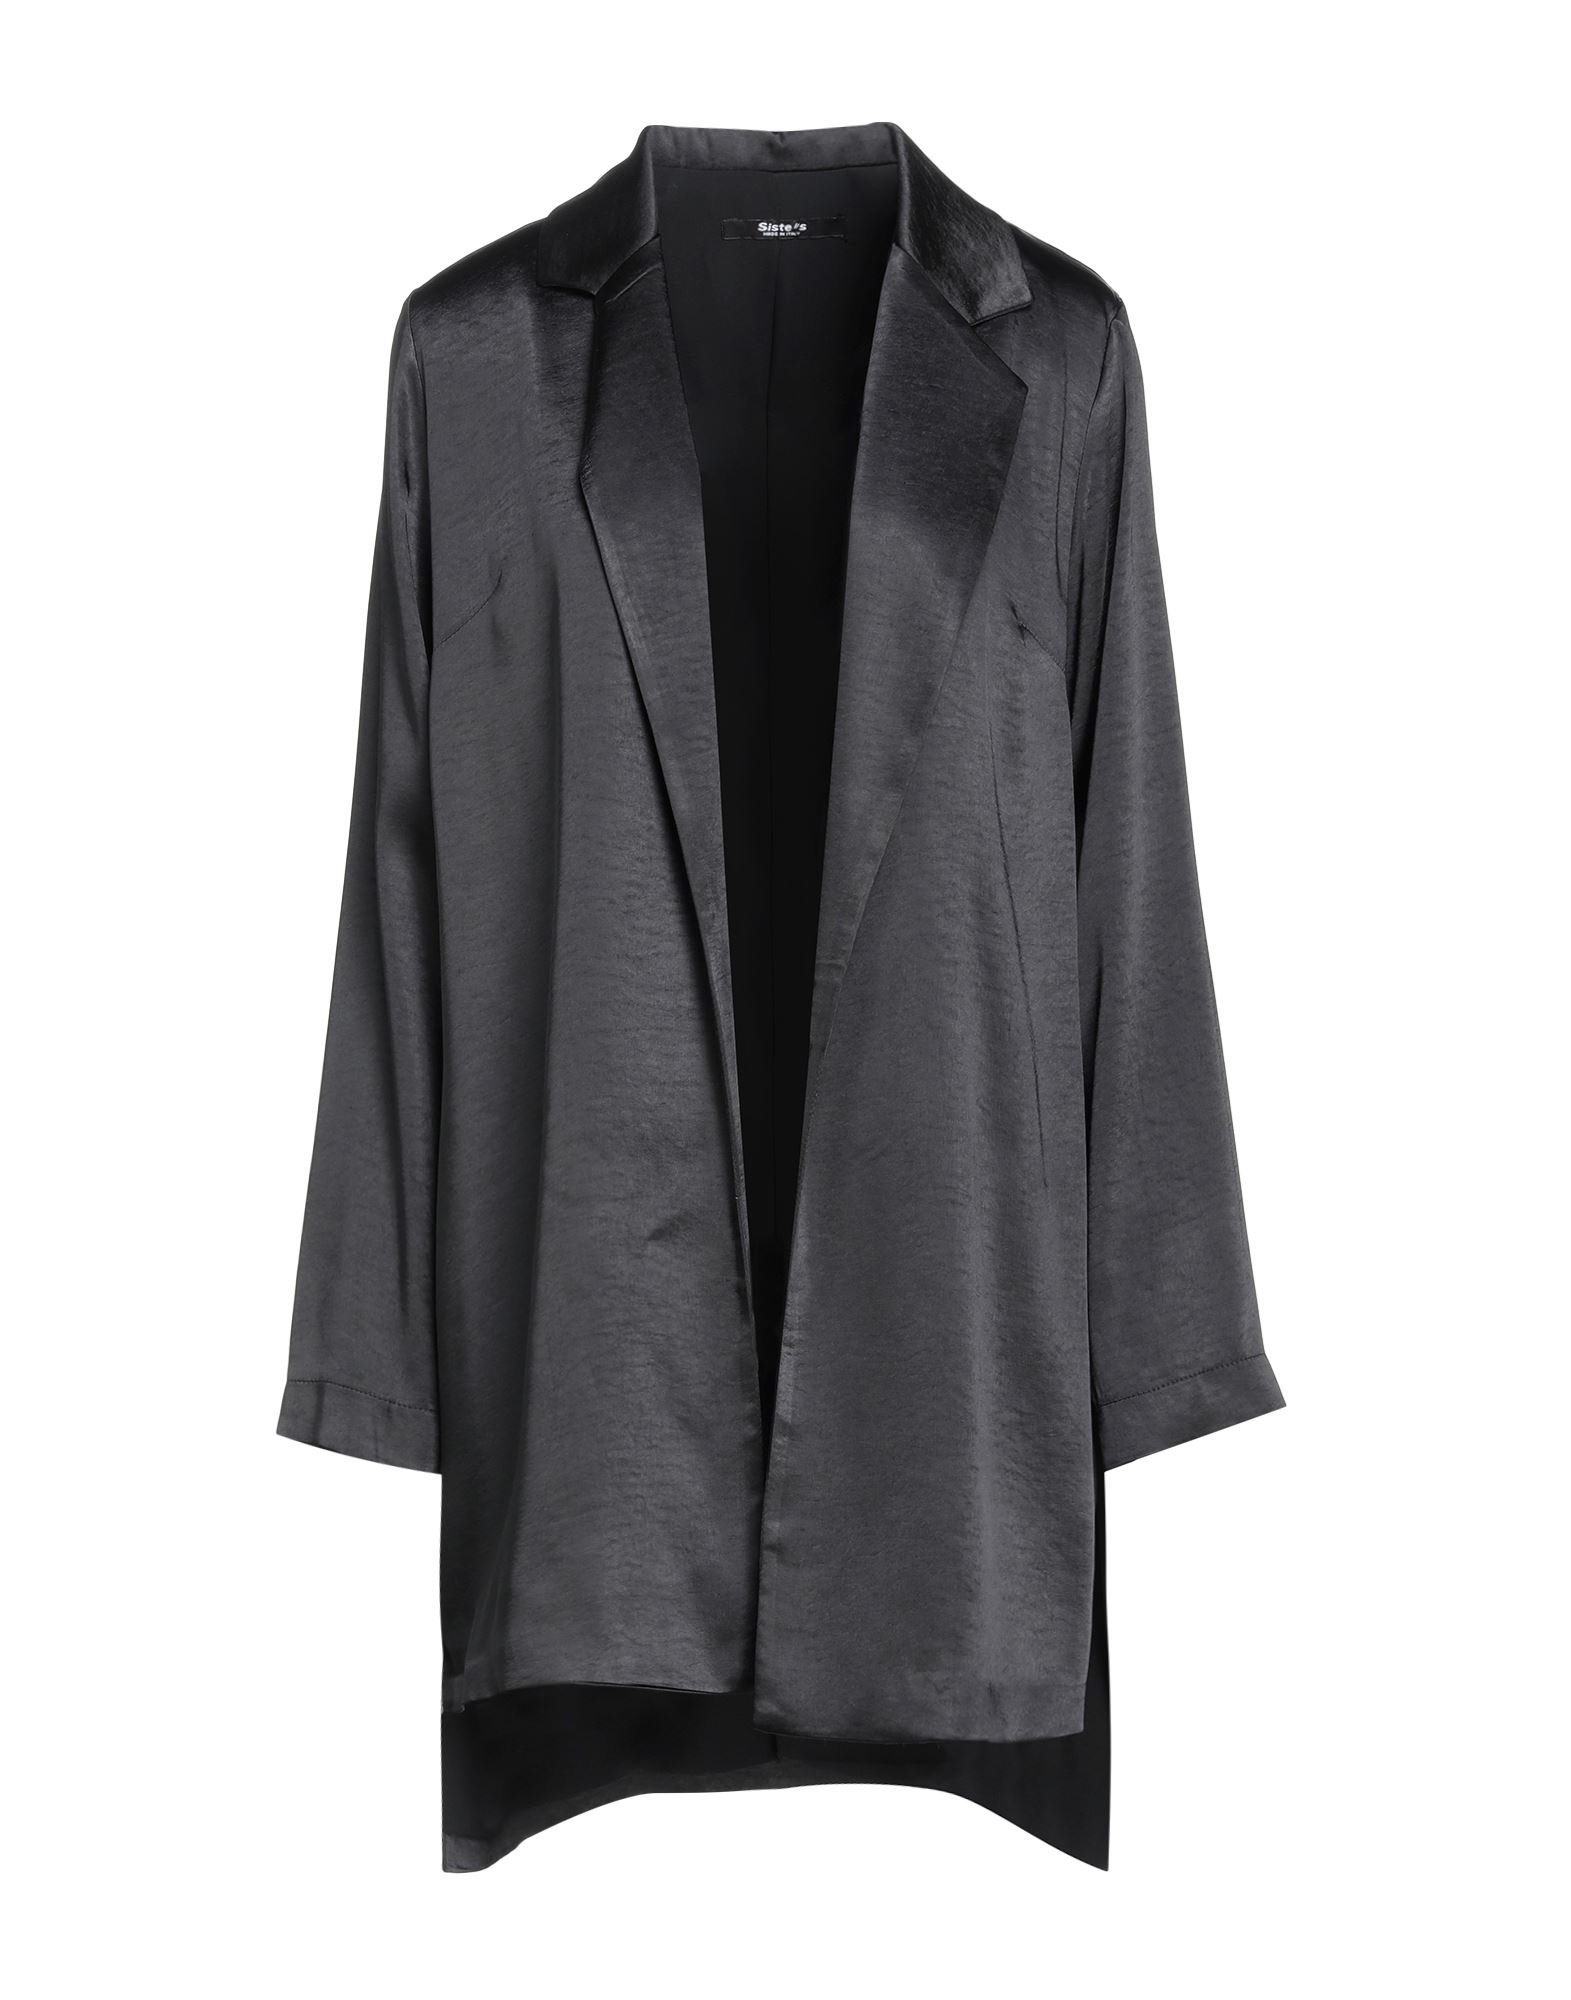 Siste's Woman Suit Jacket Black Size S Polyester